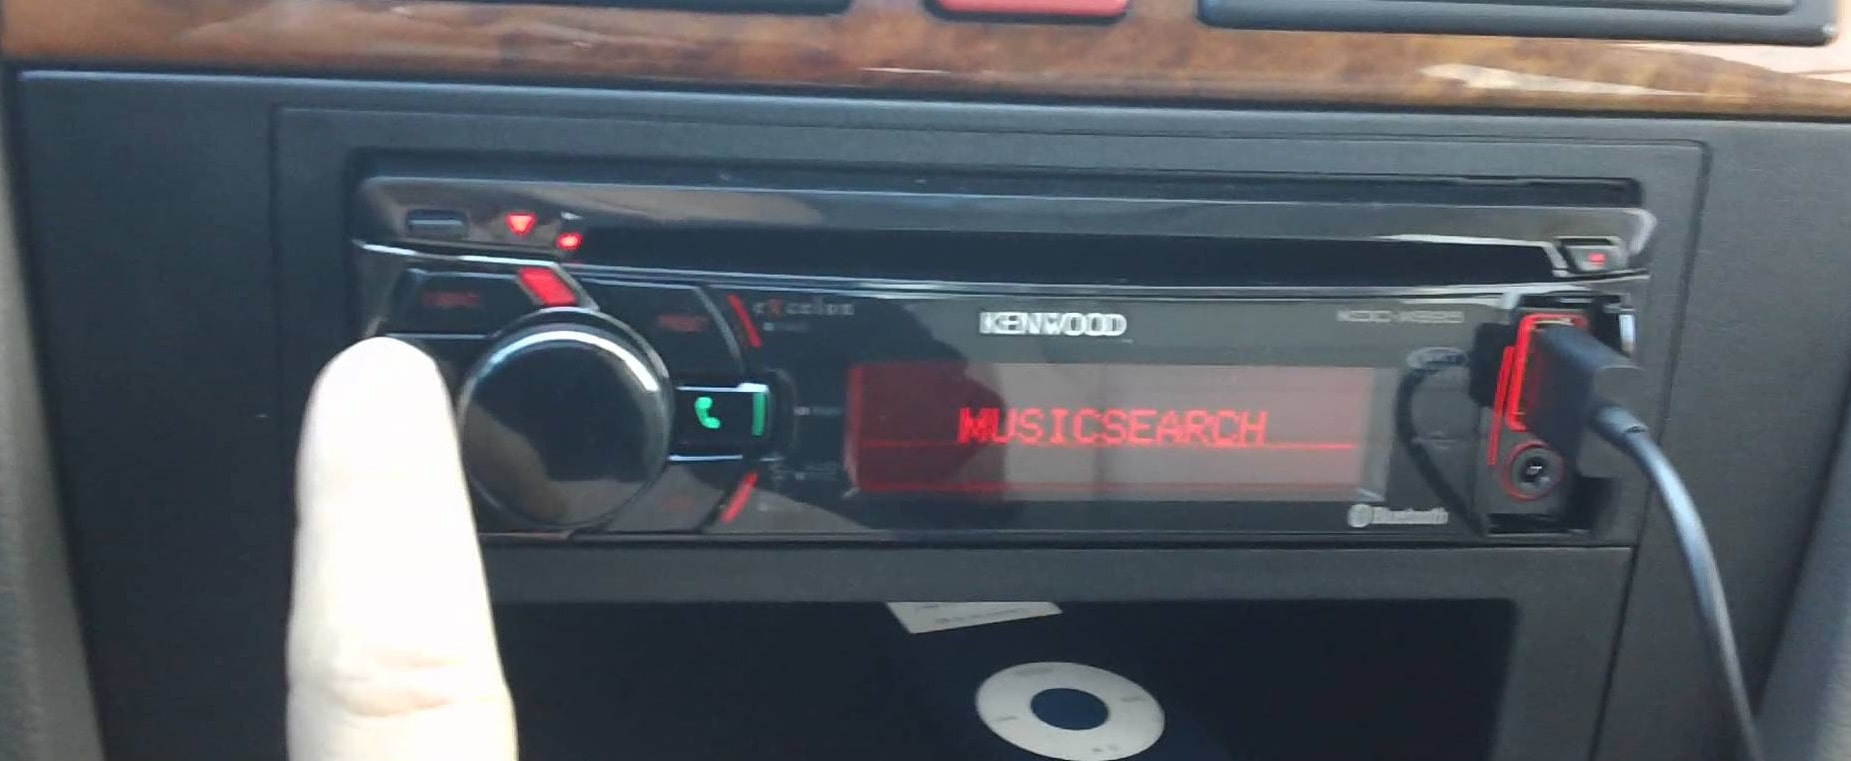 Audi A6 Radio Code